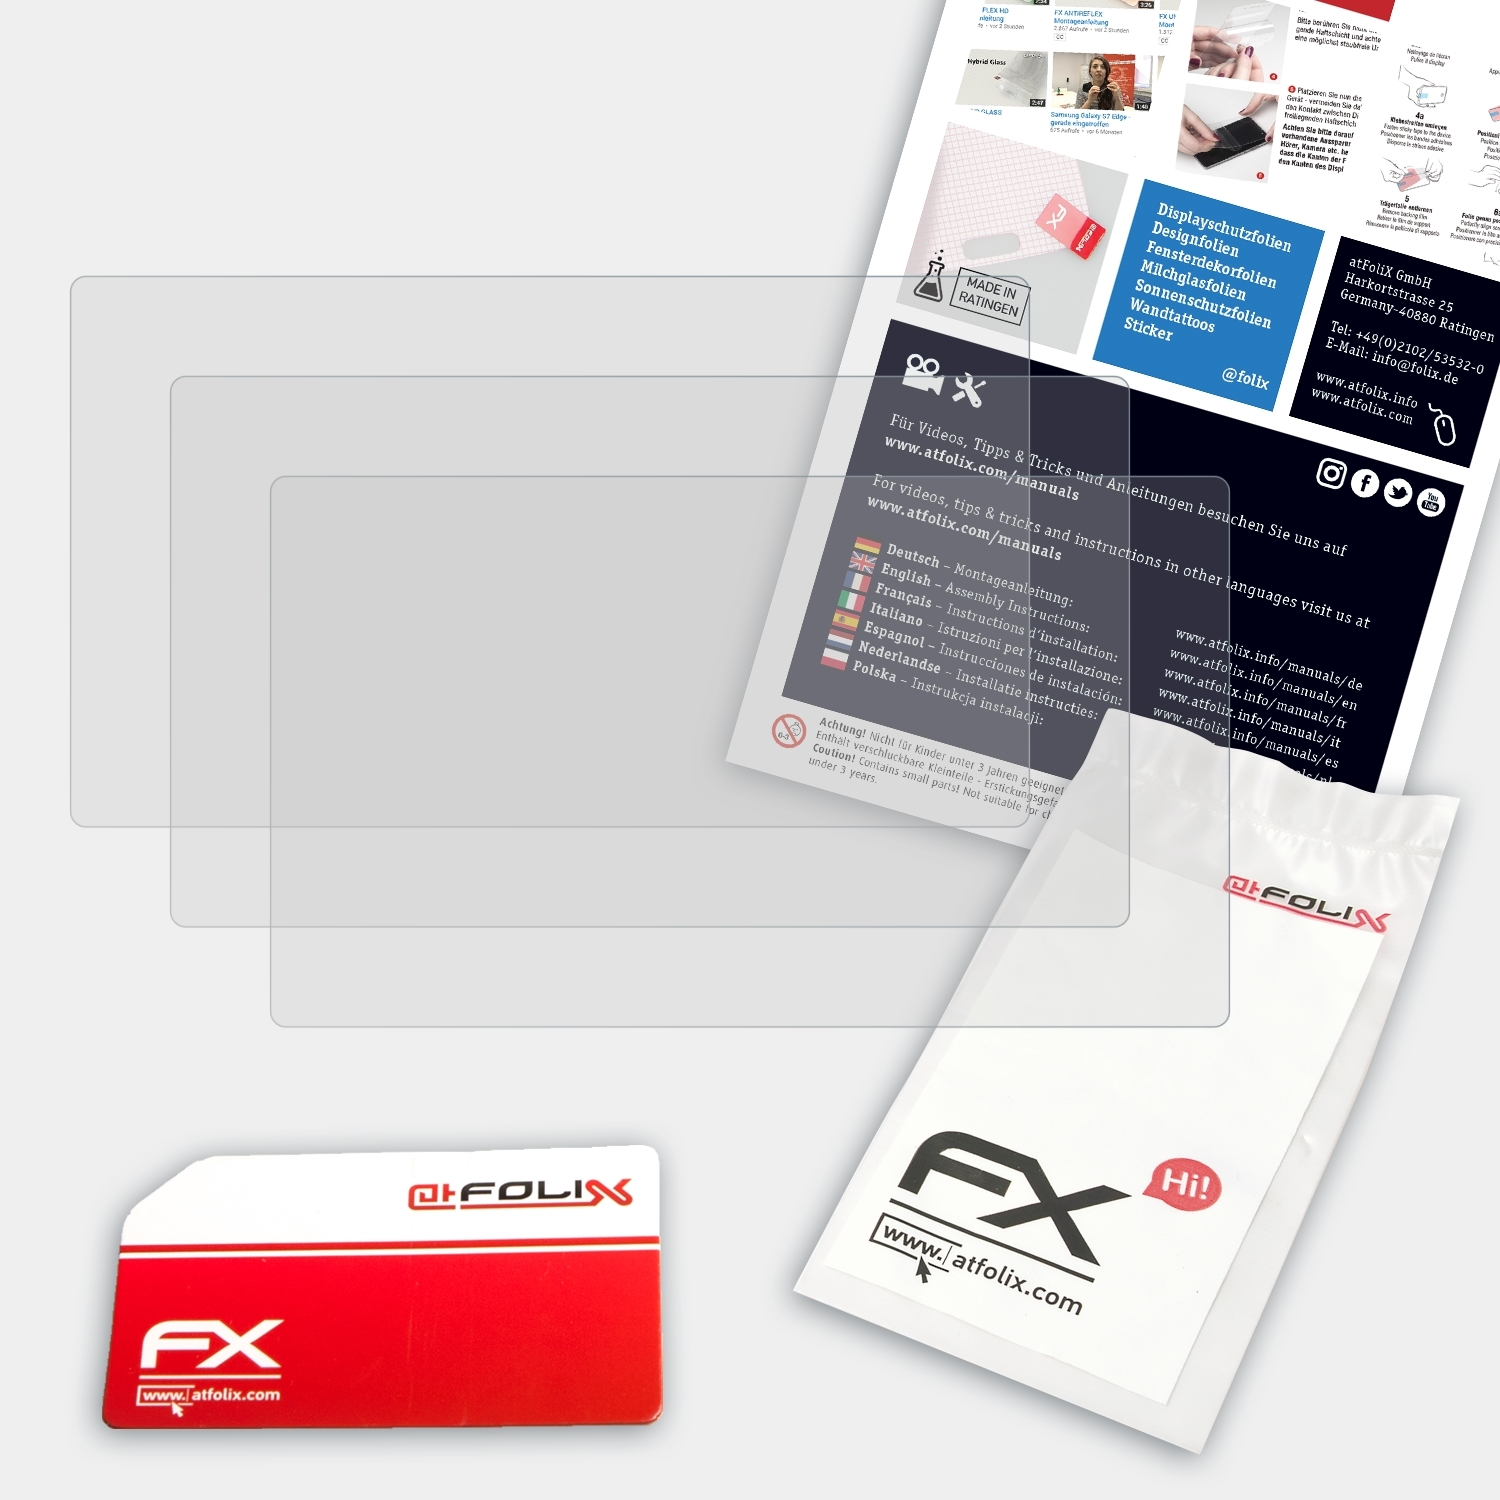 ATFOLIX 3x FX-Antireflex HC-VXF11) Displayschutz(für Panasonic